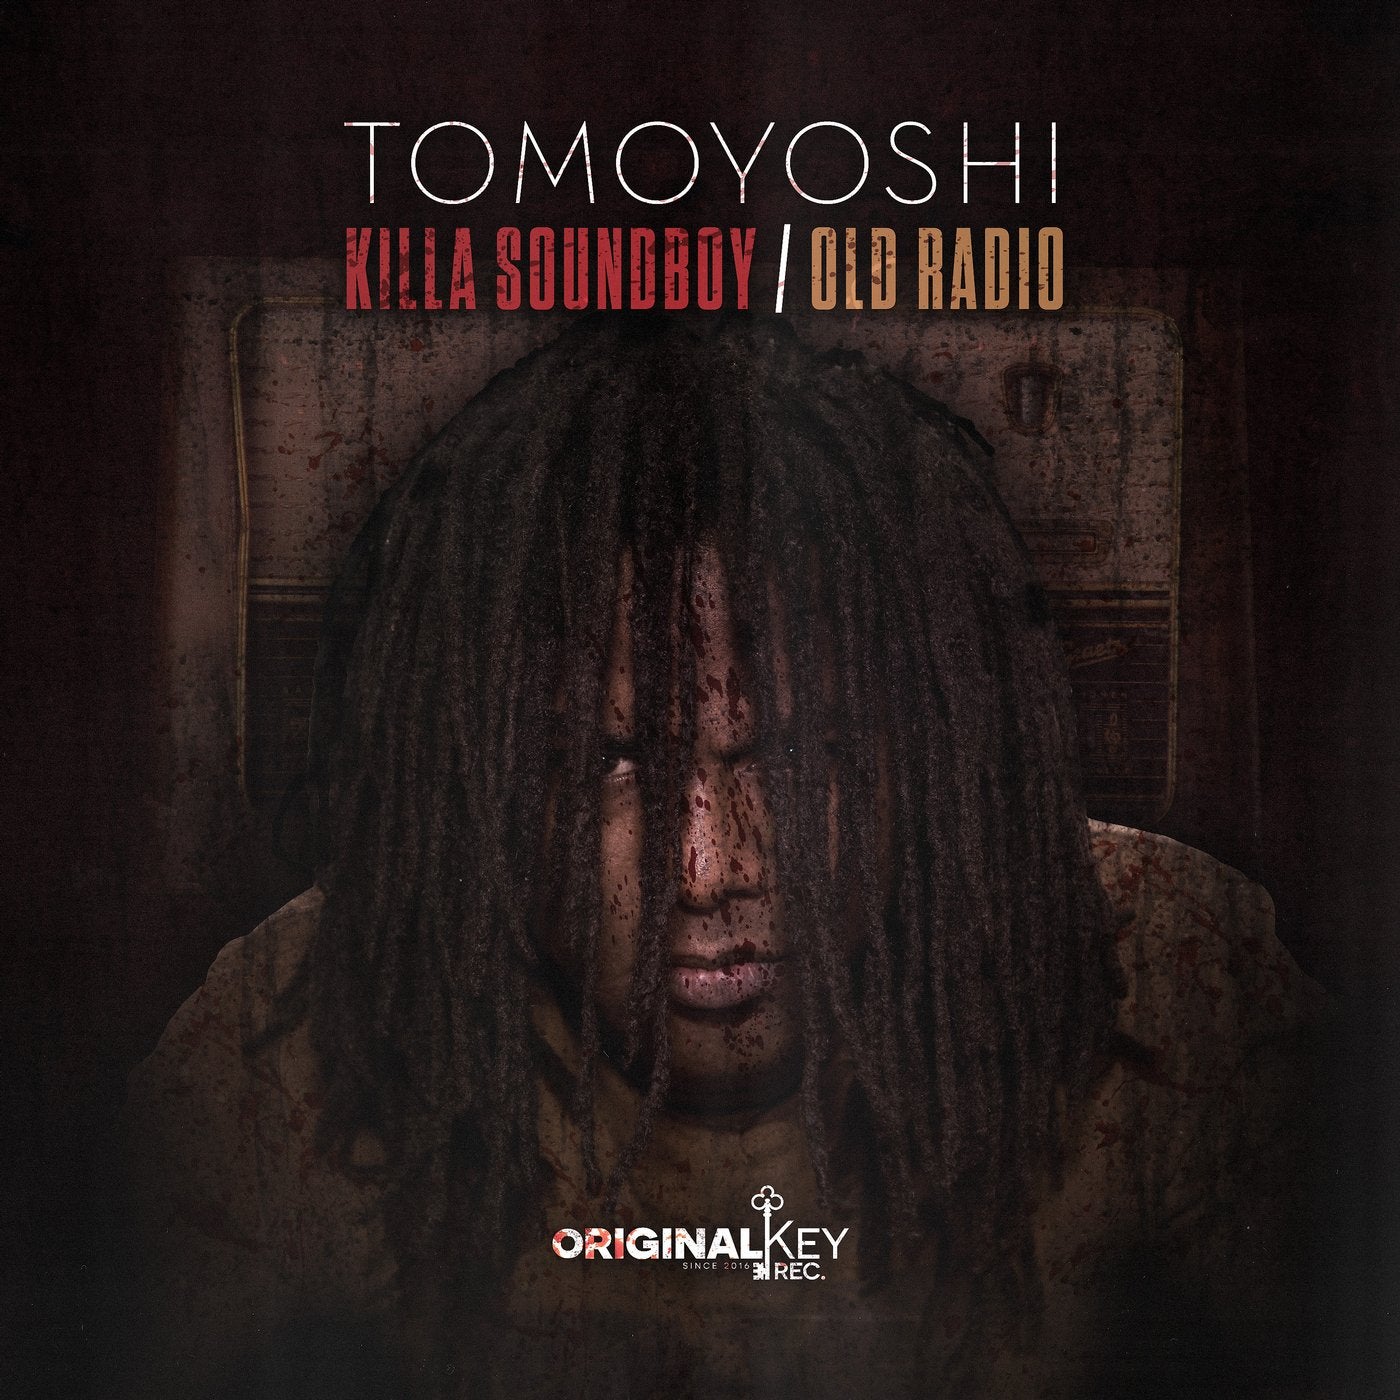 Killa Soundboy/Old Radio